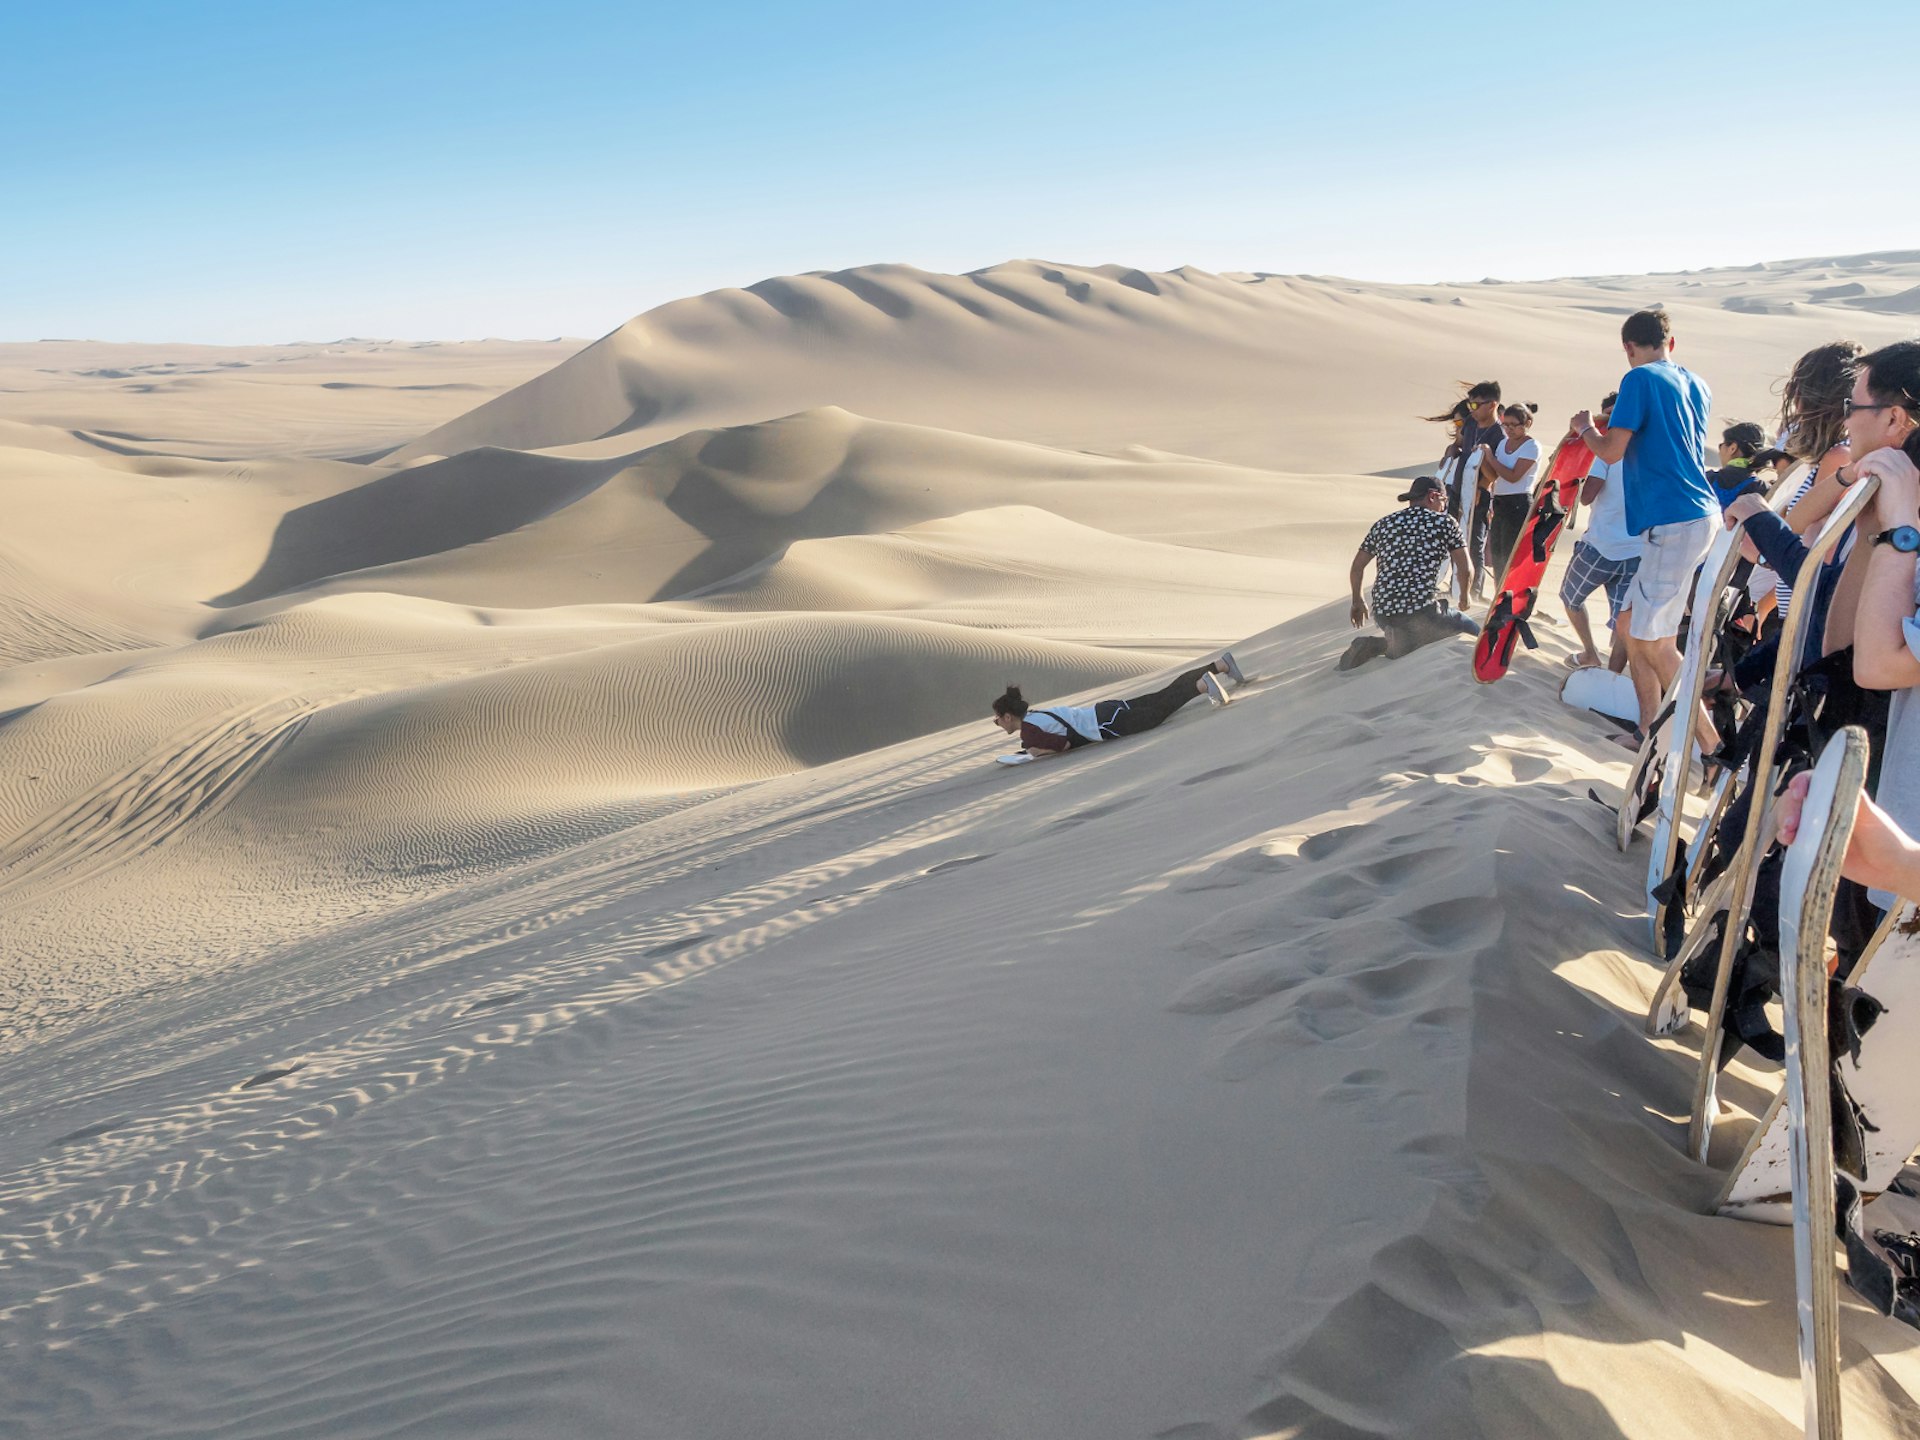 Sandboarding down a dune in Peru